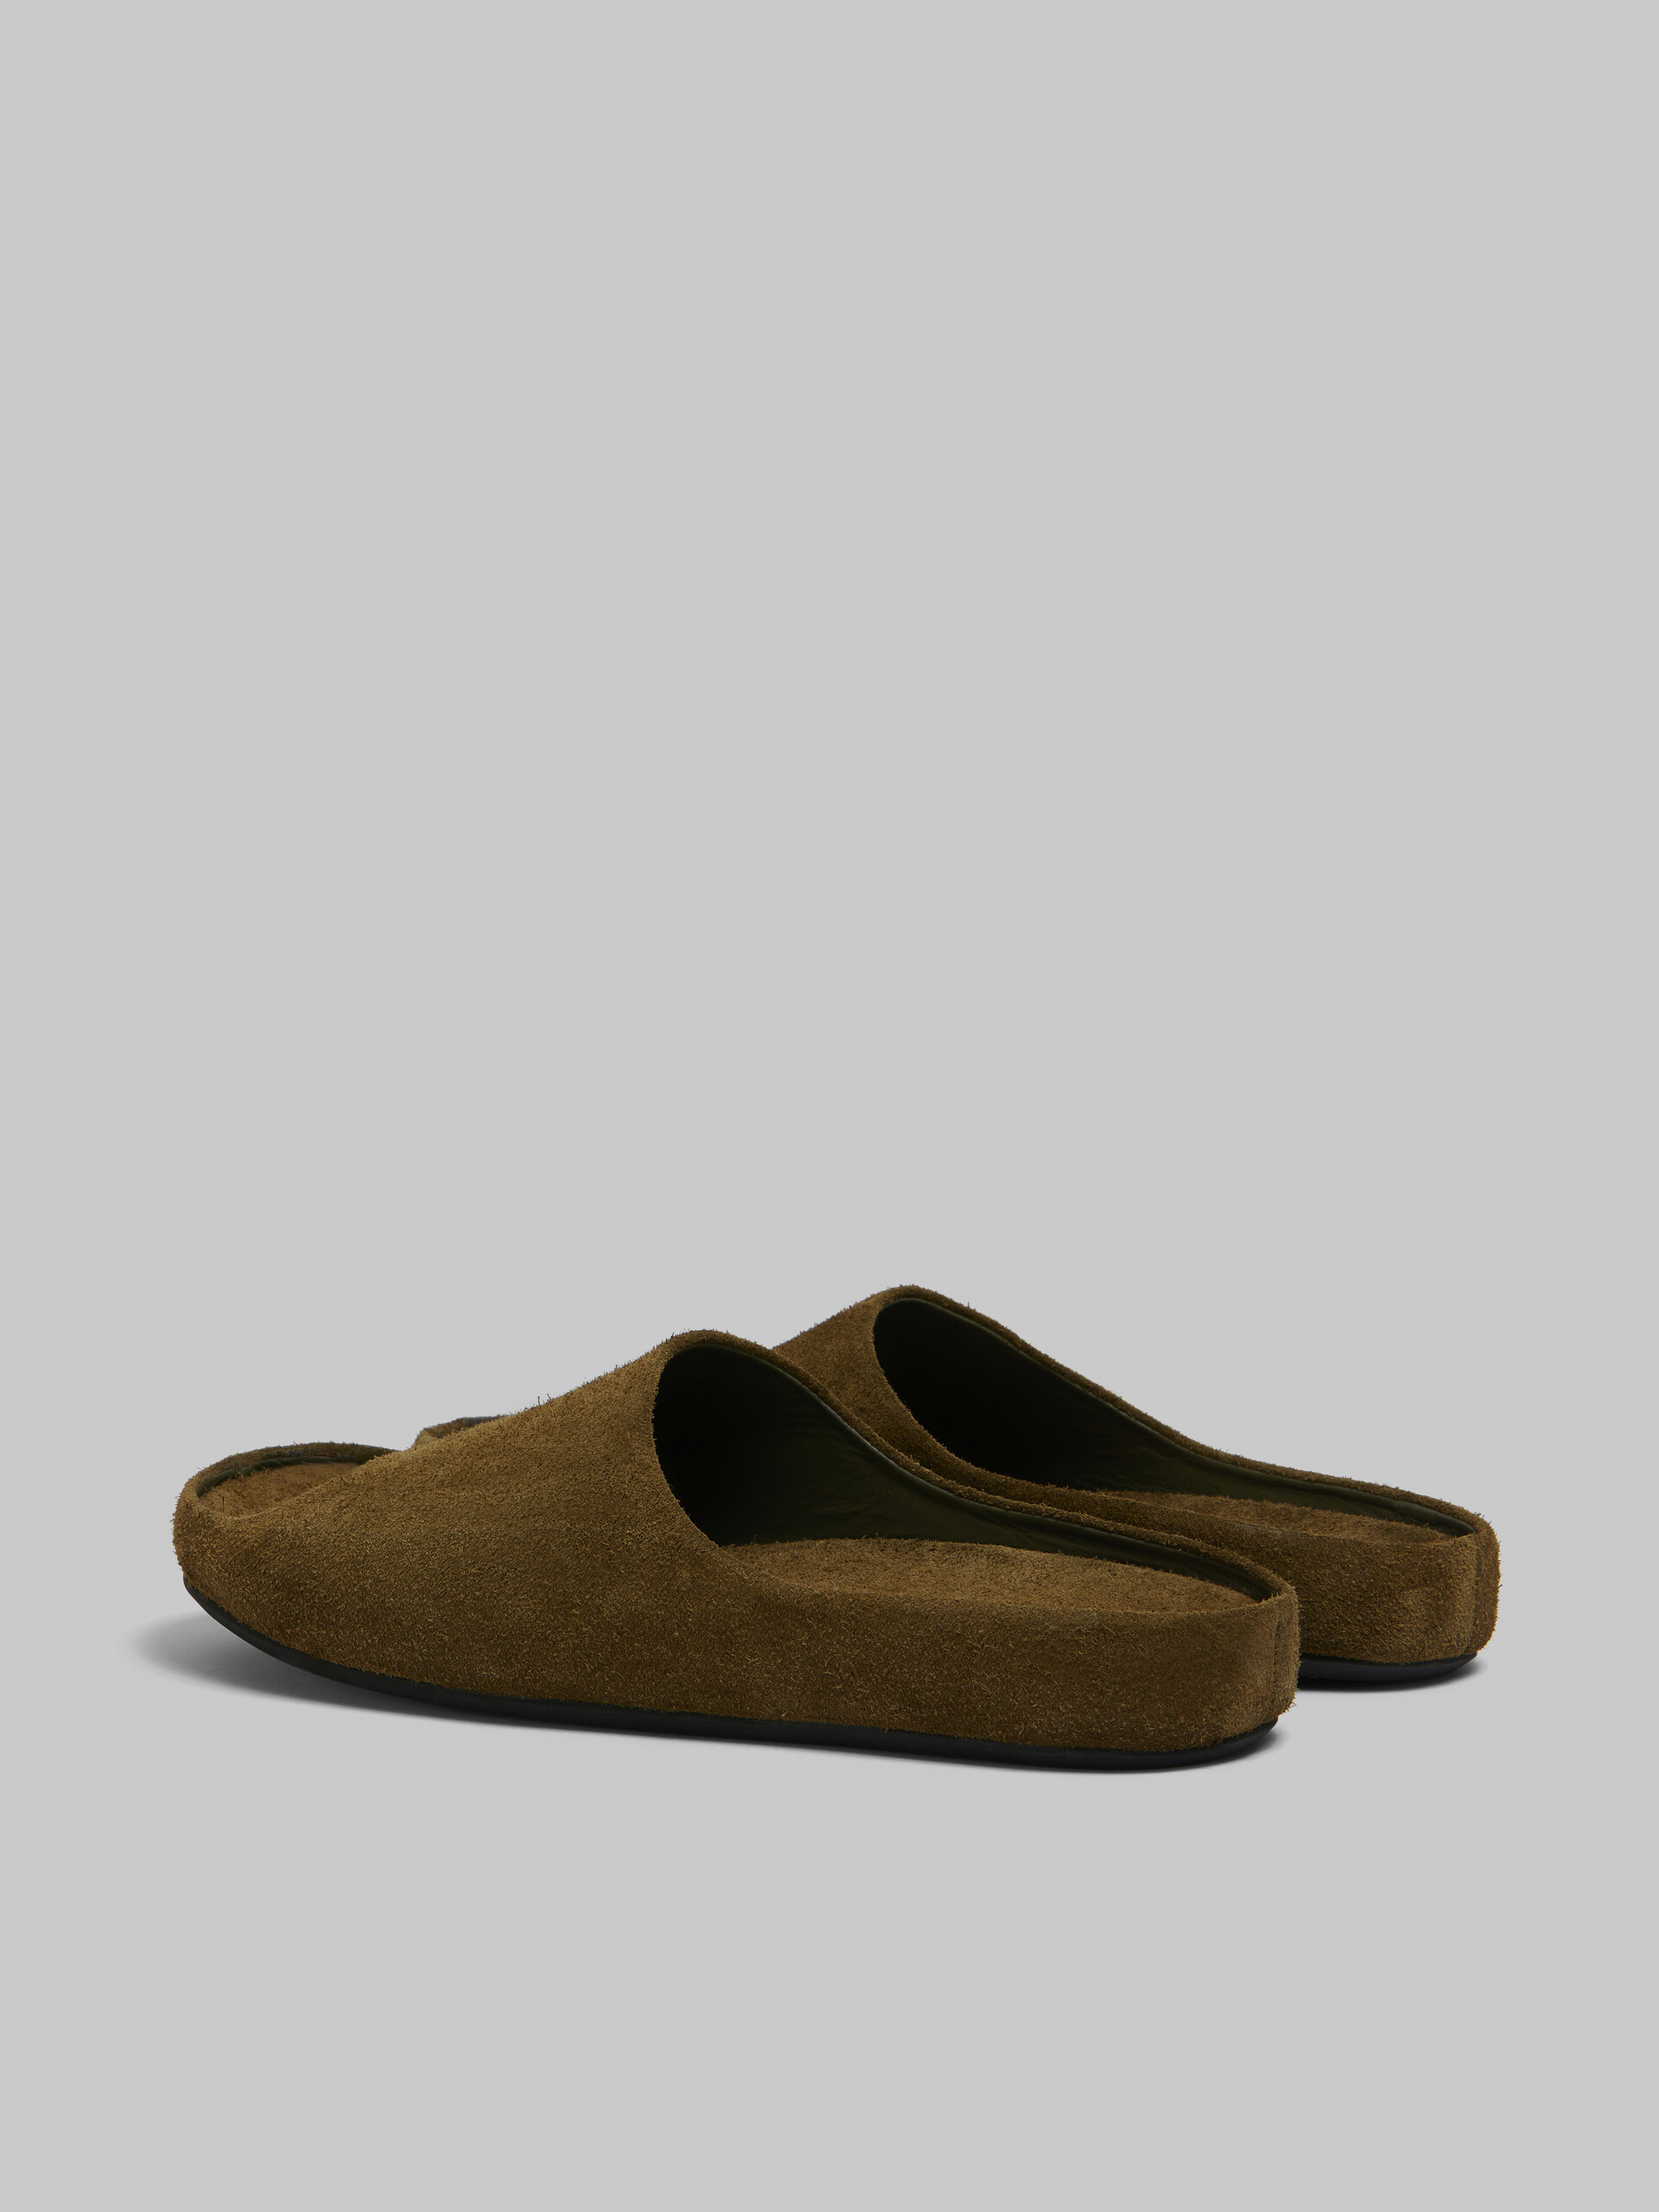 Lilac suede Fusslide sandal - Sandals - Image 3